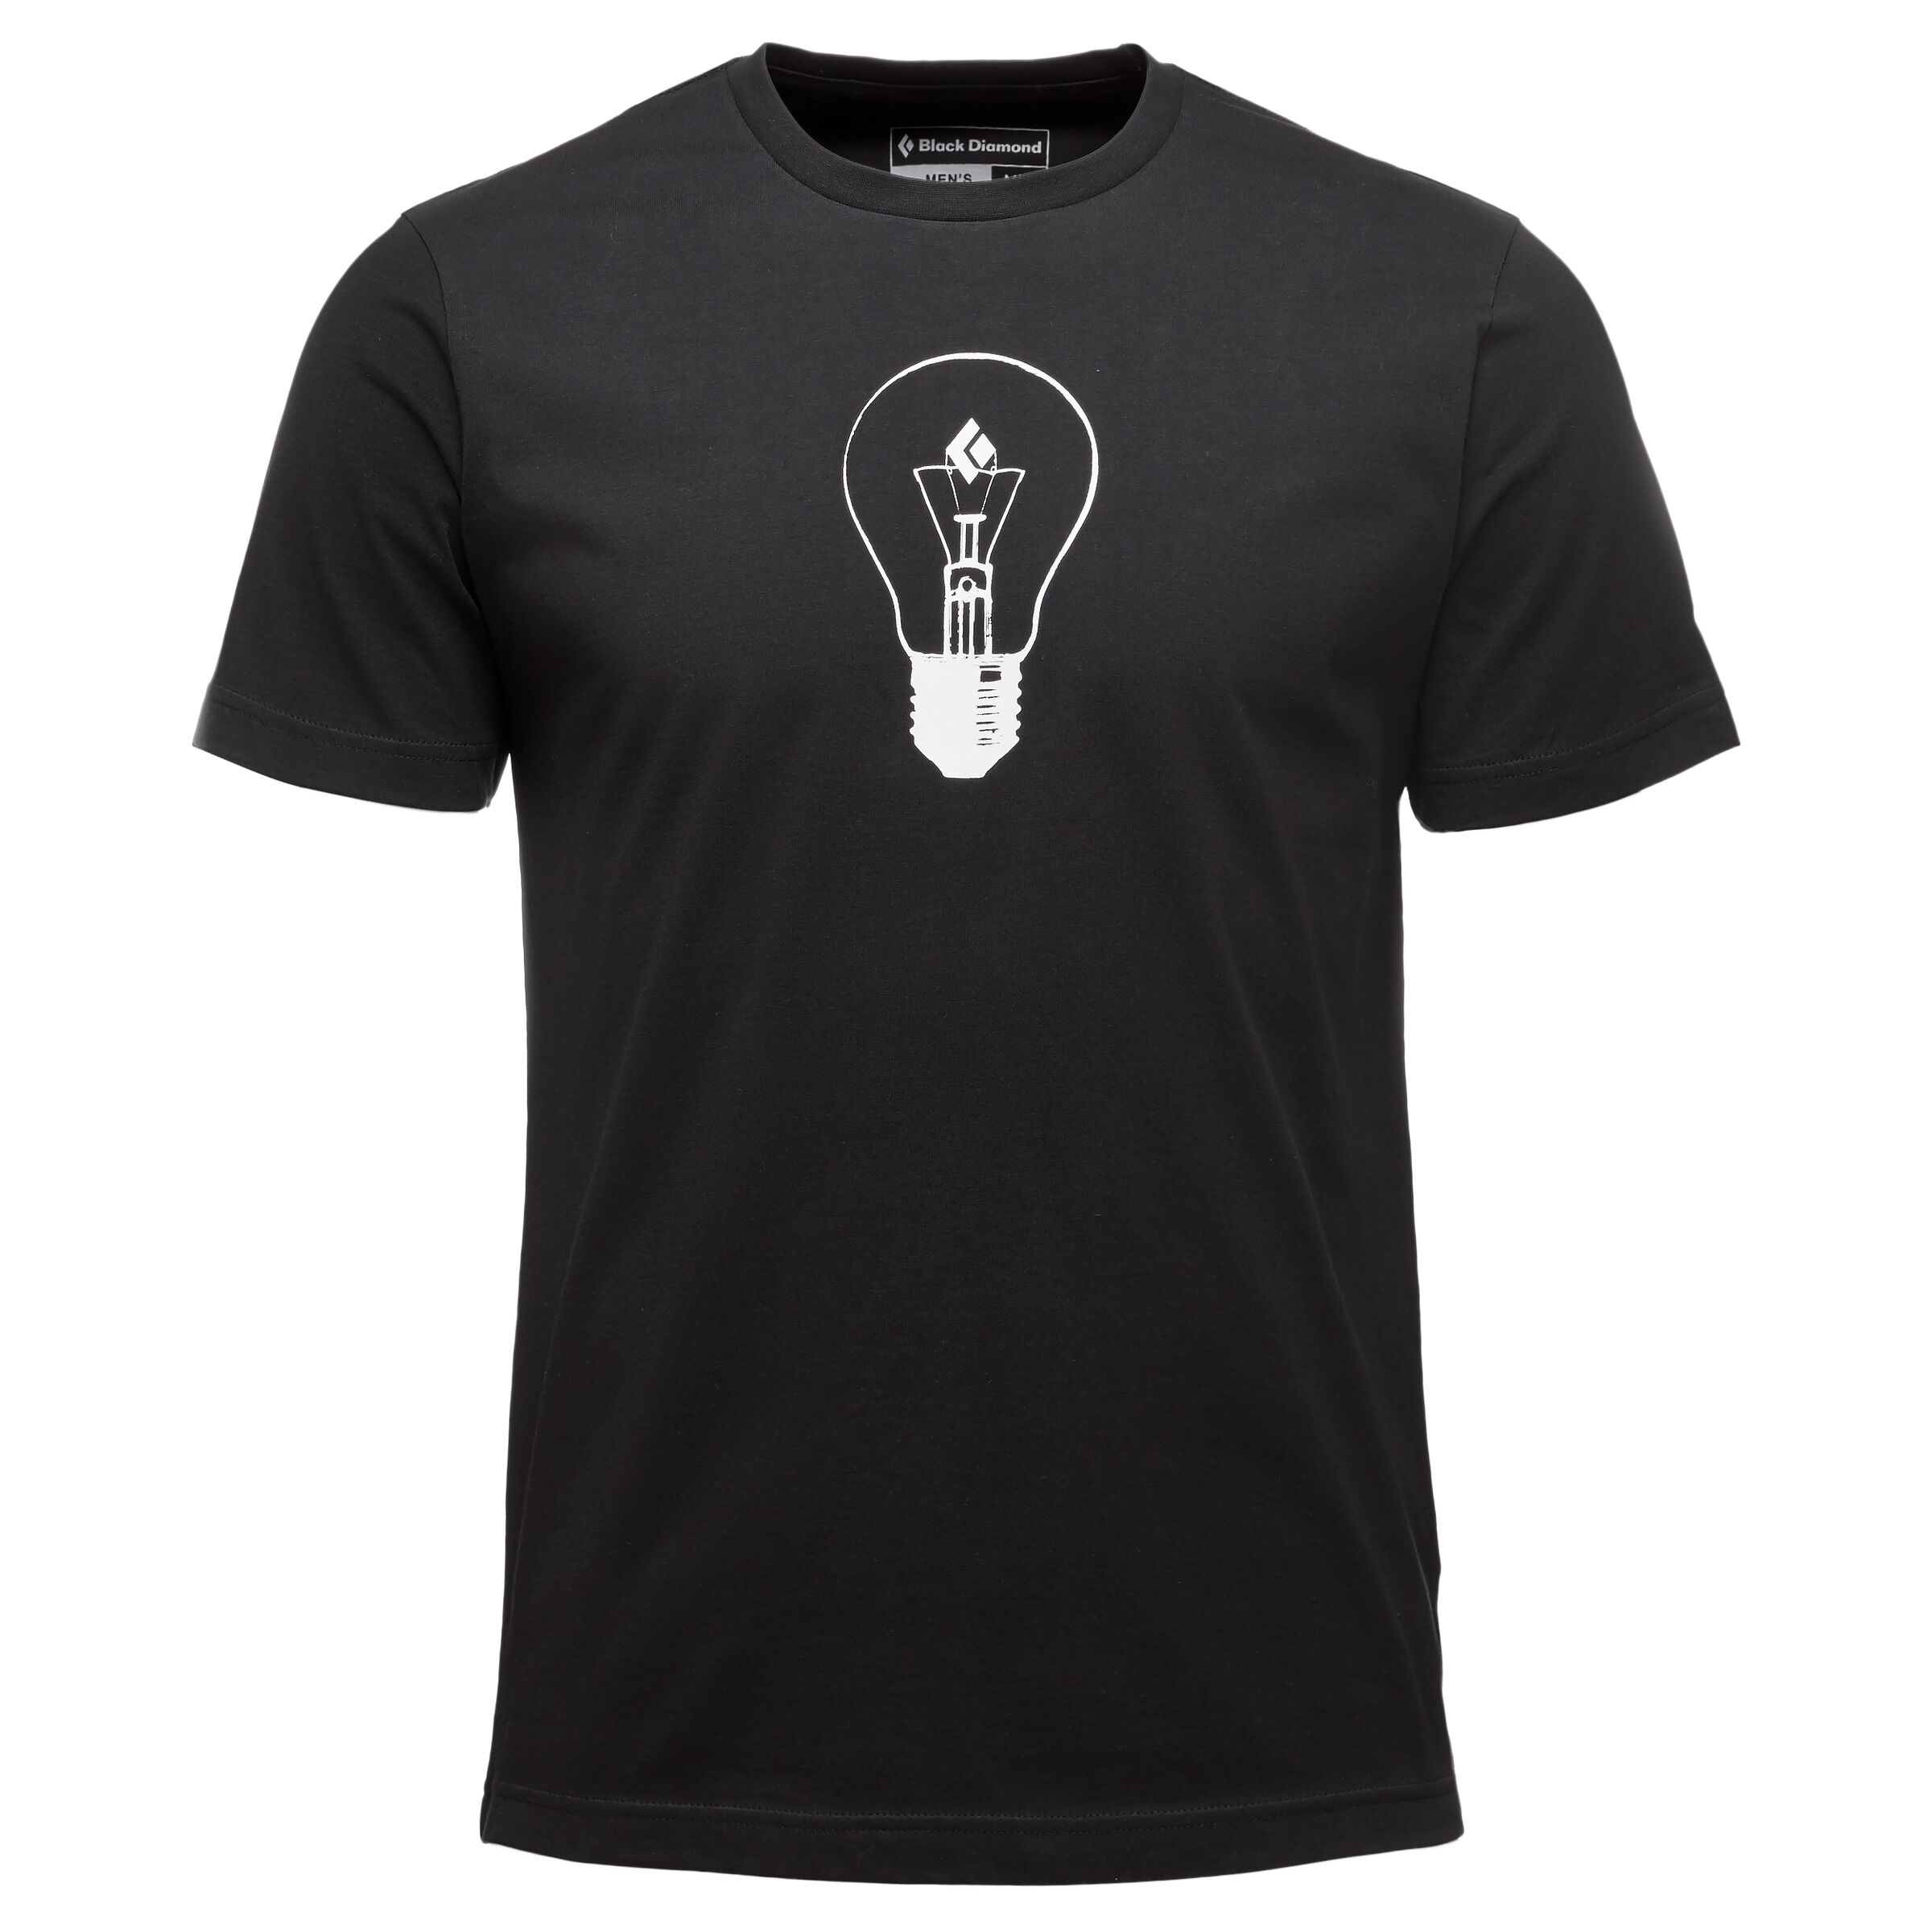 Black Diamond - Bd Idea Tee - Camiseta - Hombre